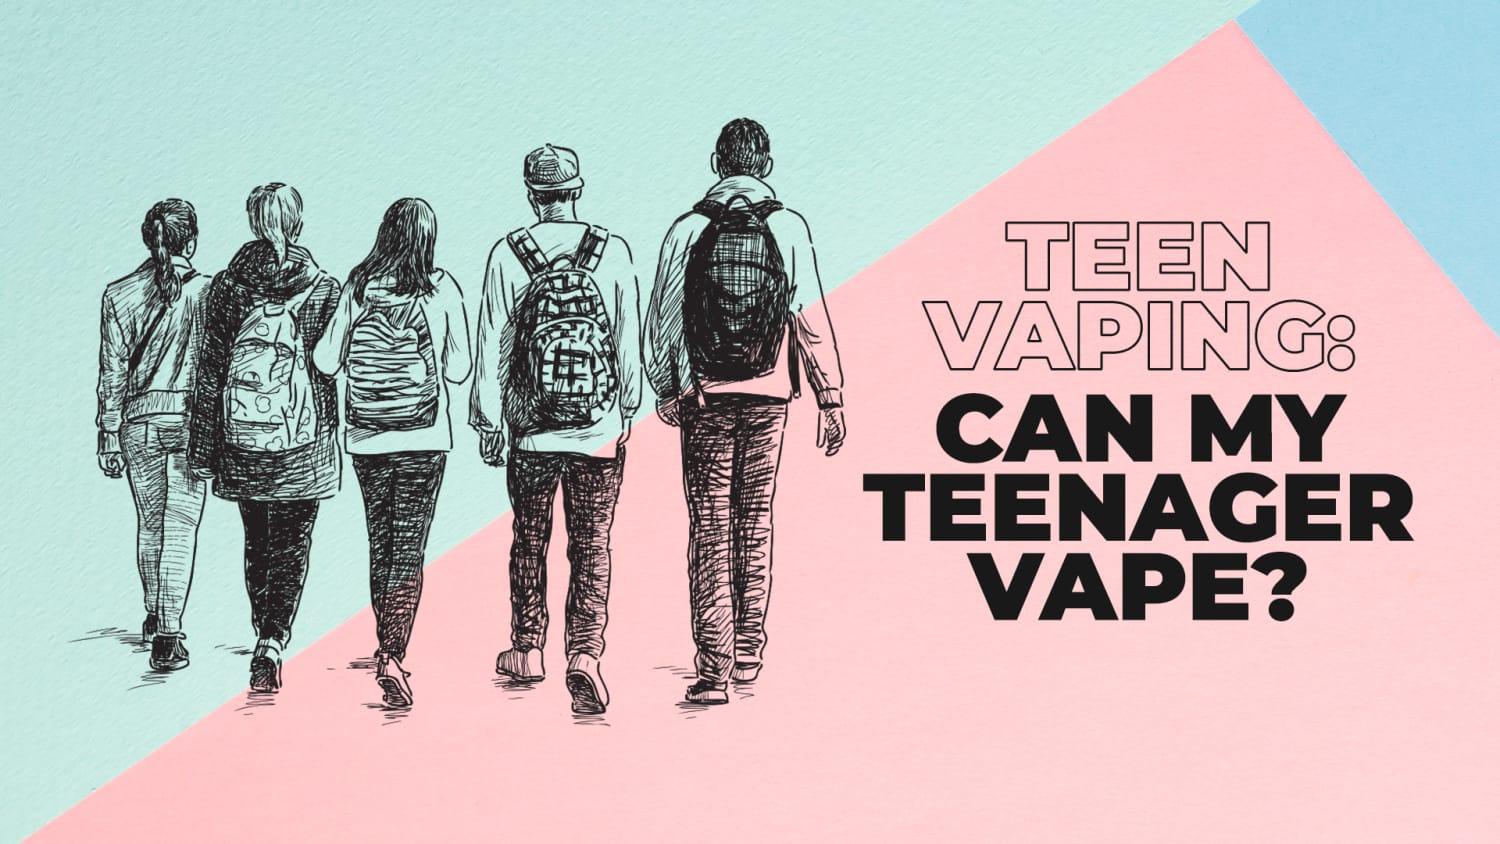 Teen Vaping: Can my Teenager Vape? - Category:Health, Sub Category:Safety, Sub Category:Underage Vaping